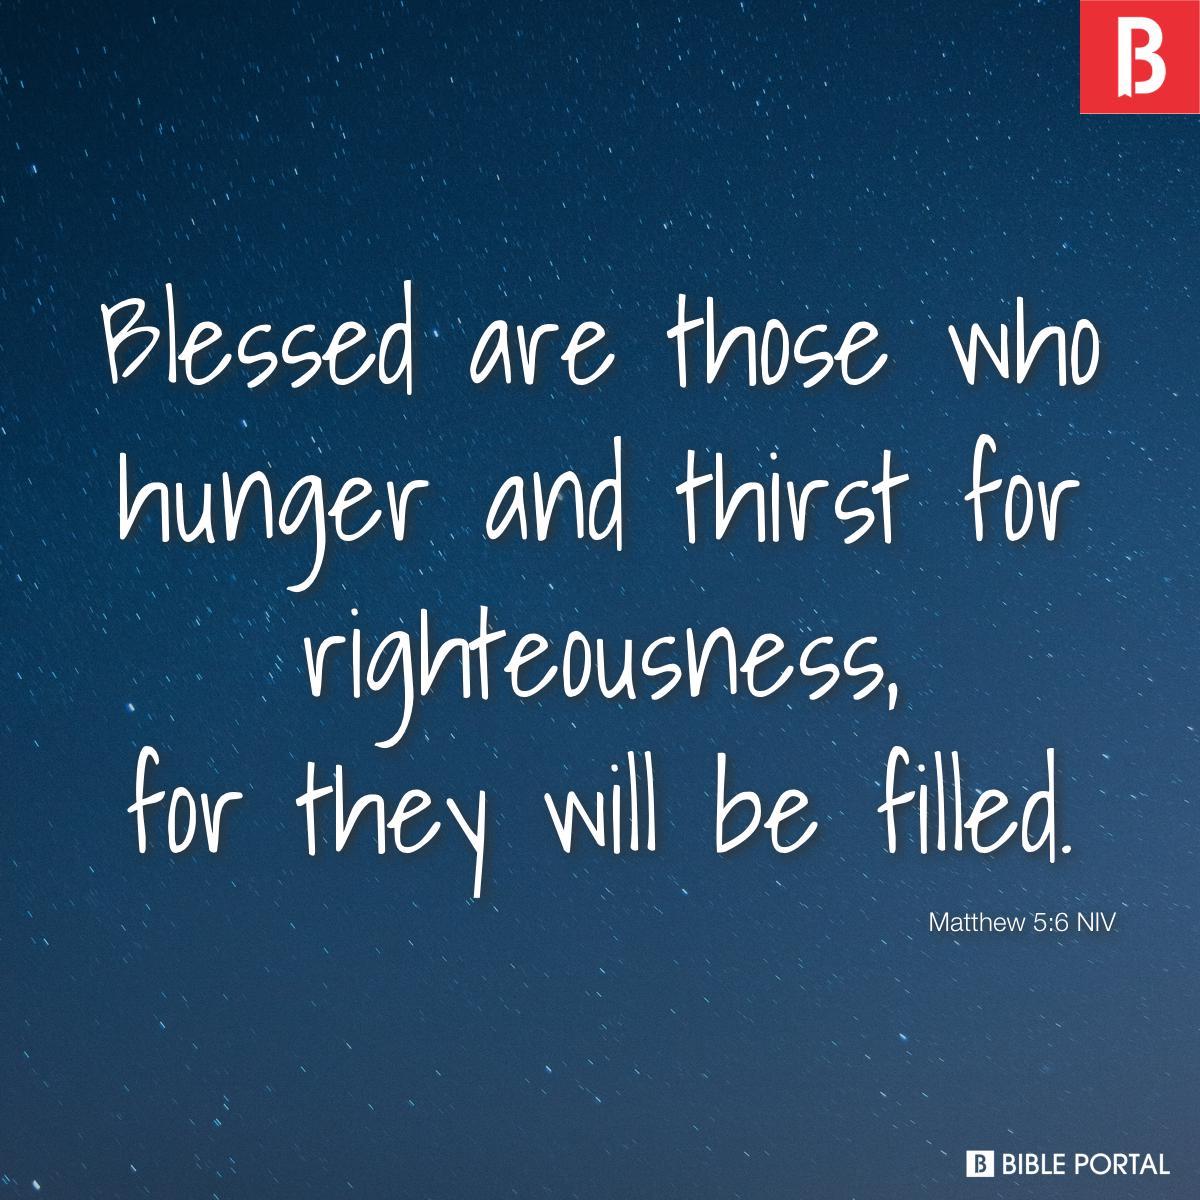 Matthew 5:6 NIV